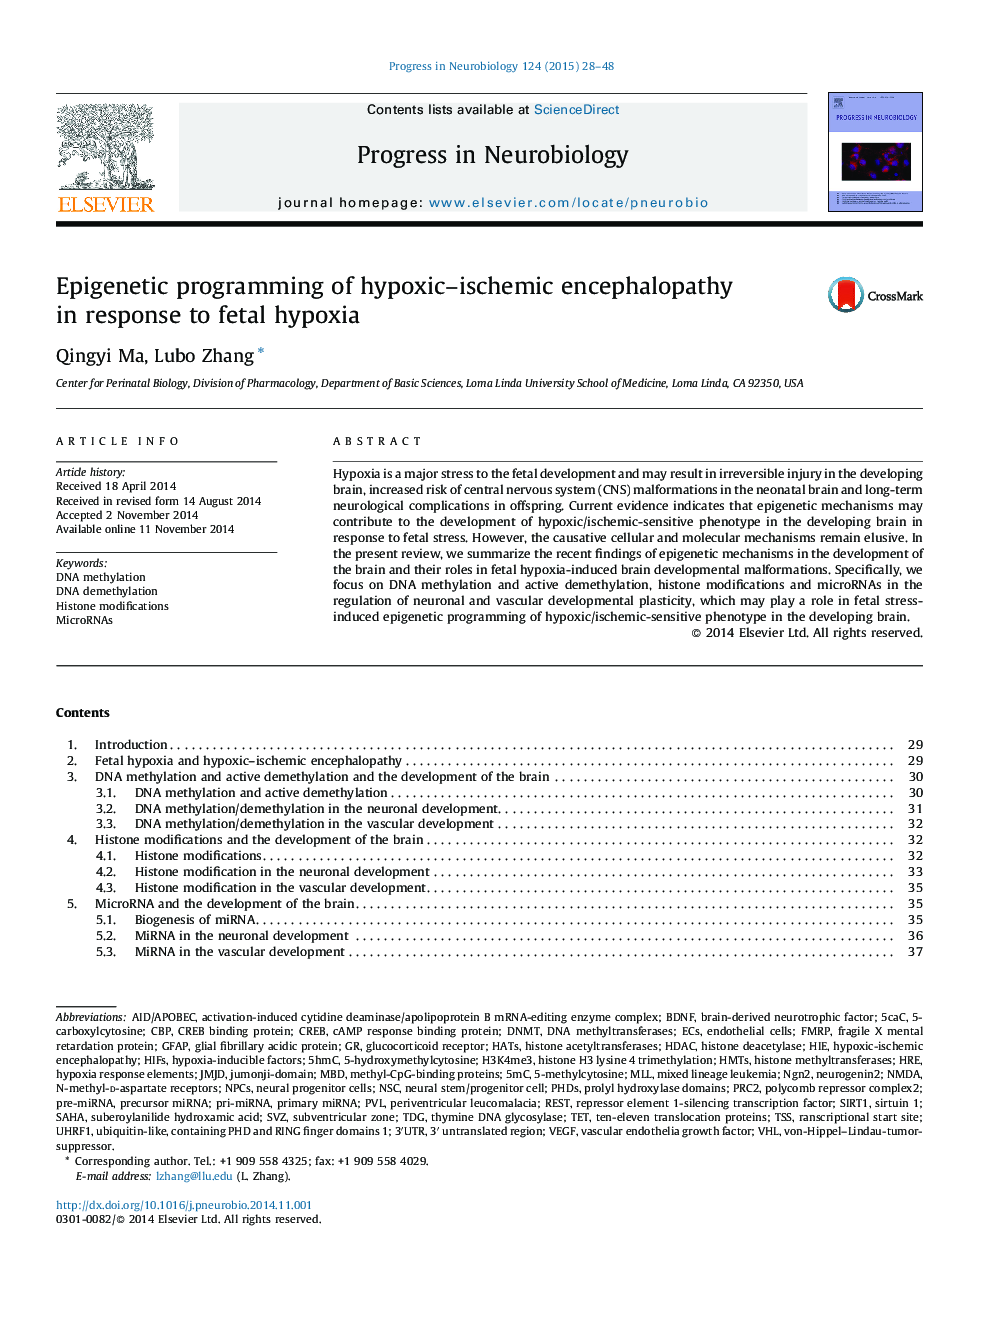 Epigenetic programming of hypoxic-ischemic encephalopathy in response to fetal hypoxia